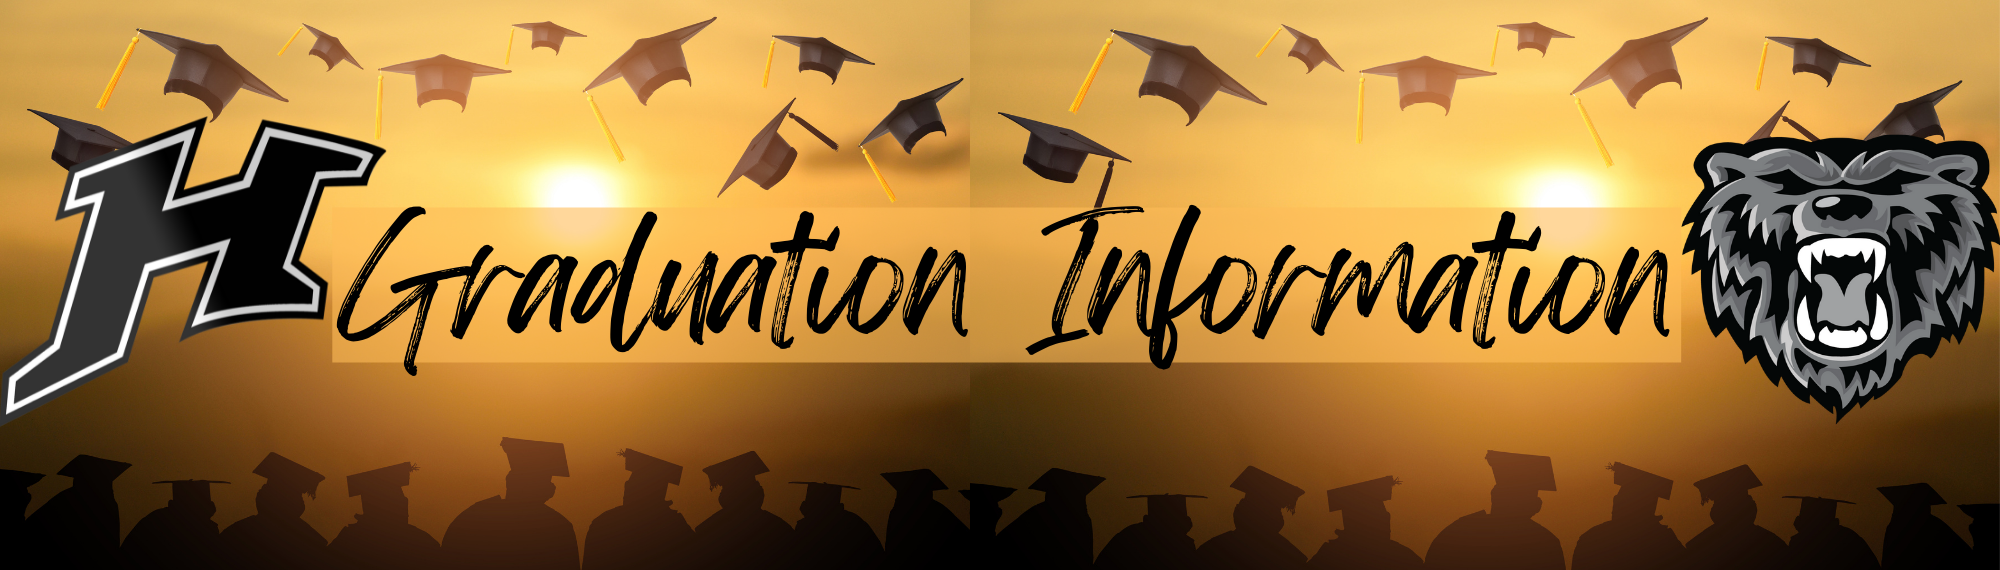 Graduation information